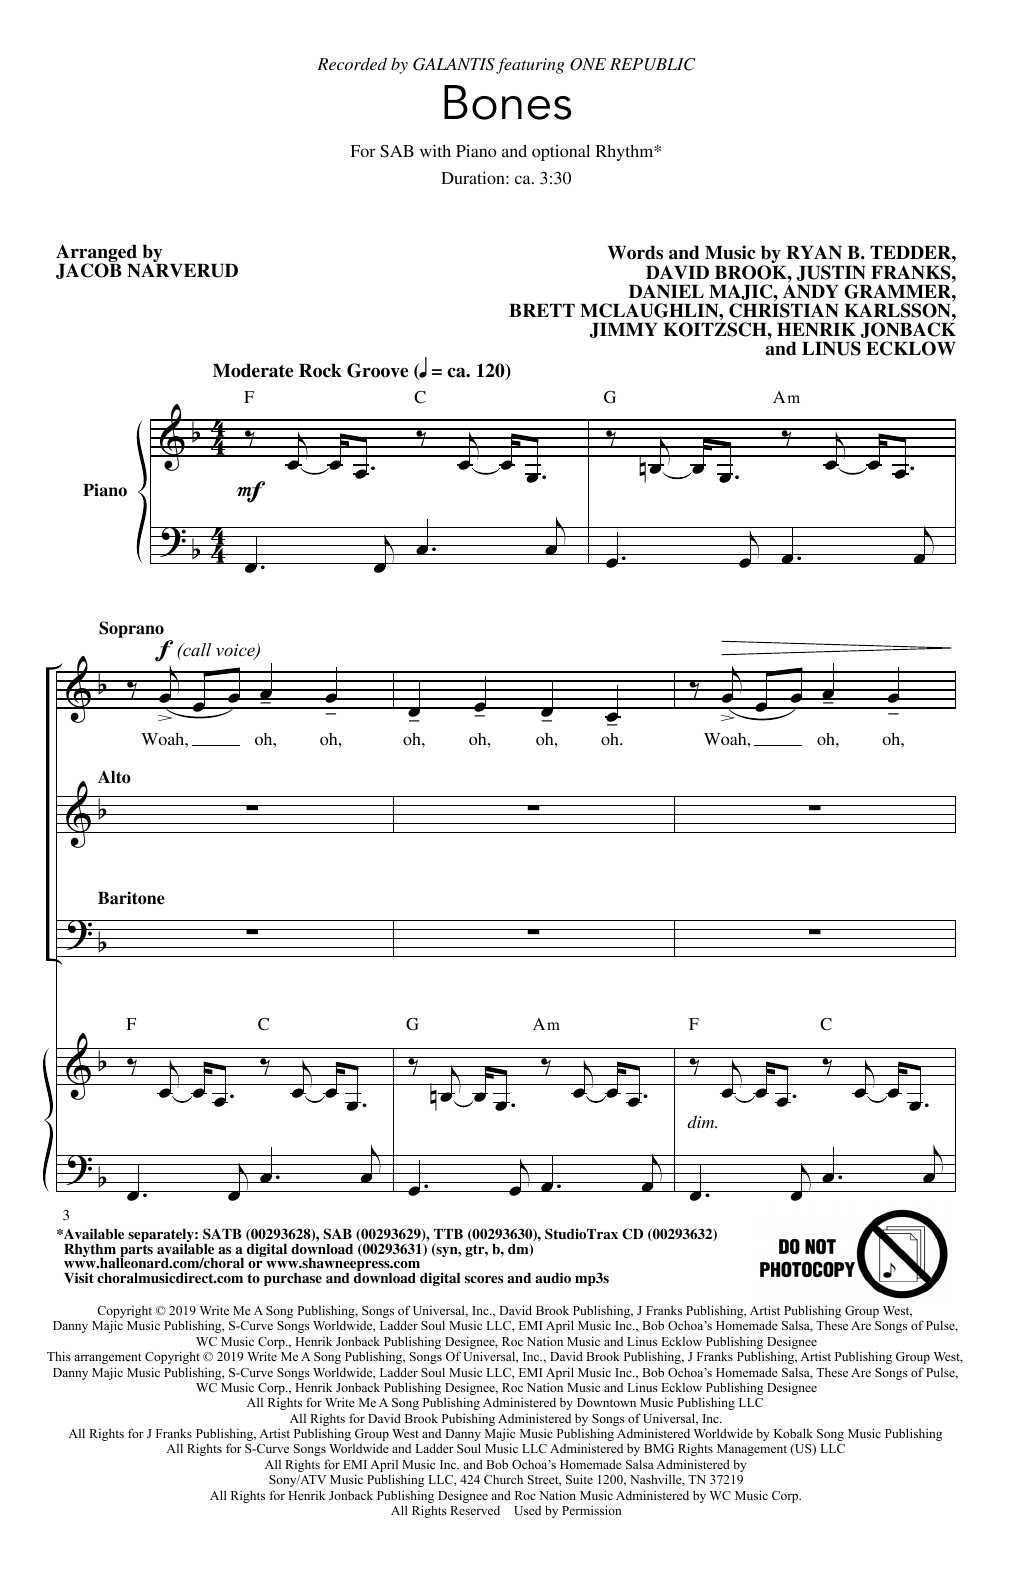 Galantis Bones (feat. OneRepublic) (arr. Jacob Narverud) Sheet Music Notes & Chords for SATB Choir - Download or Print PDF